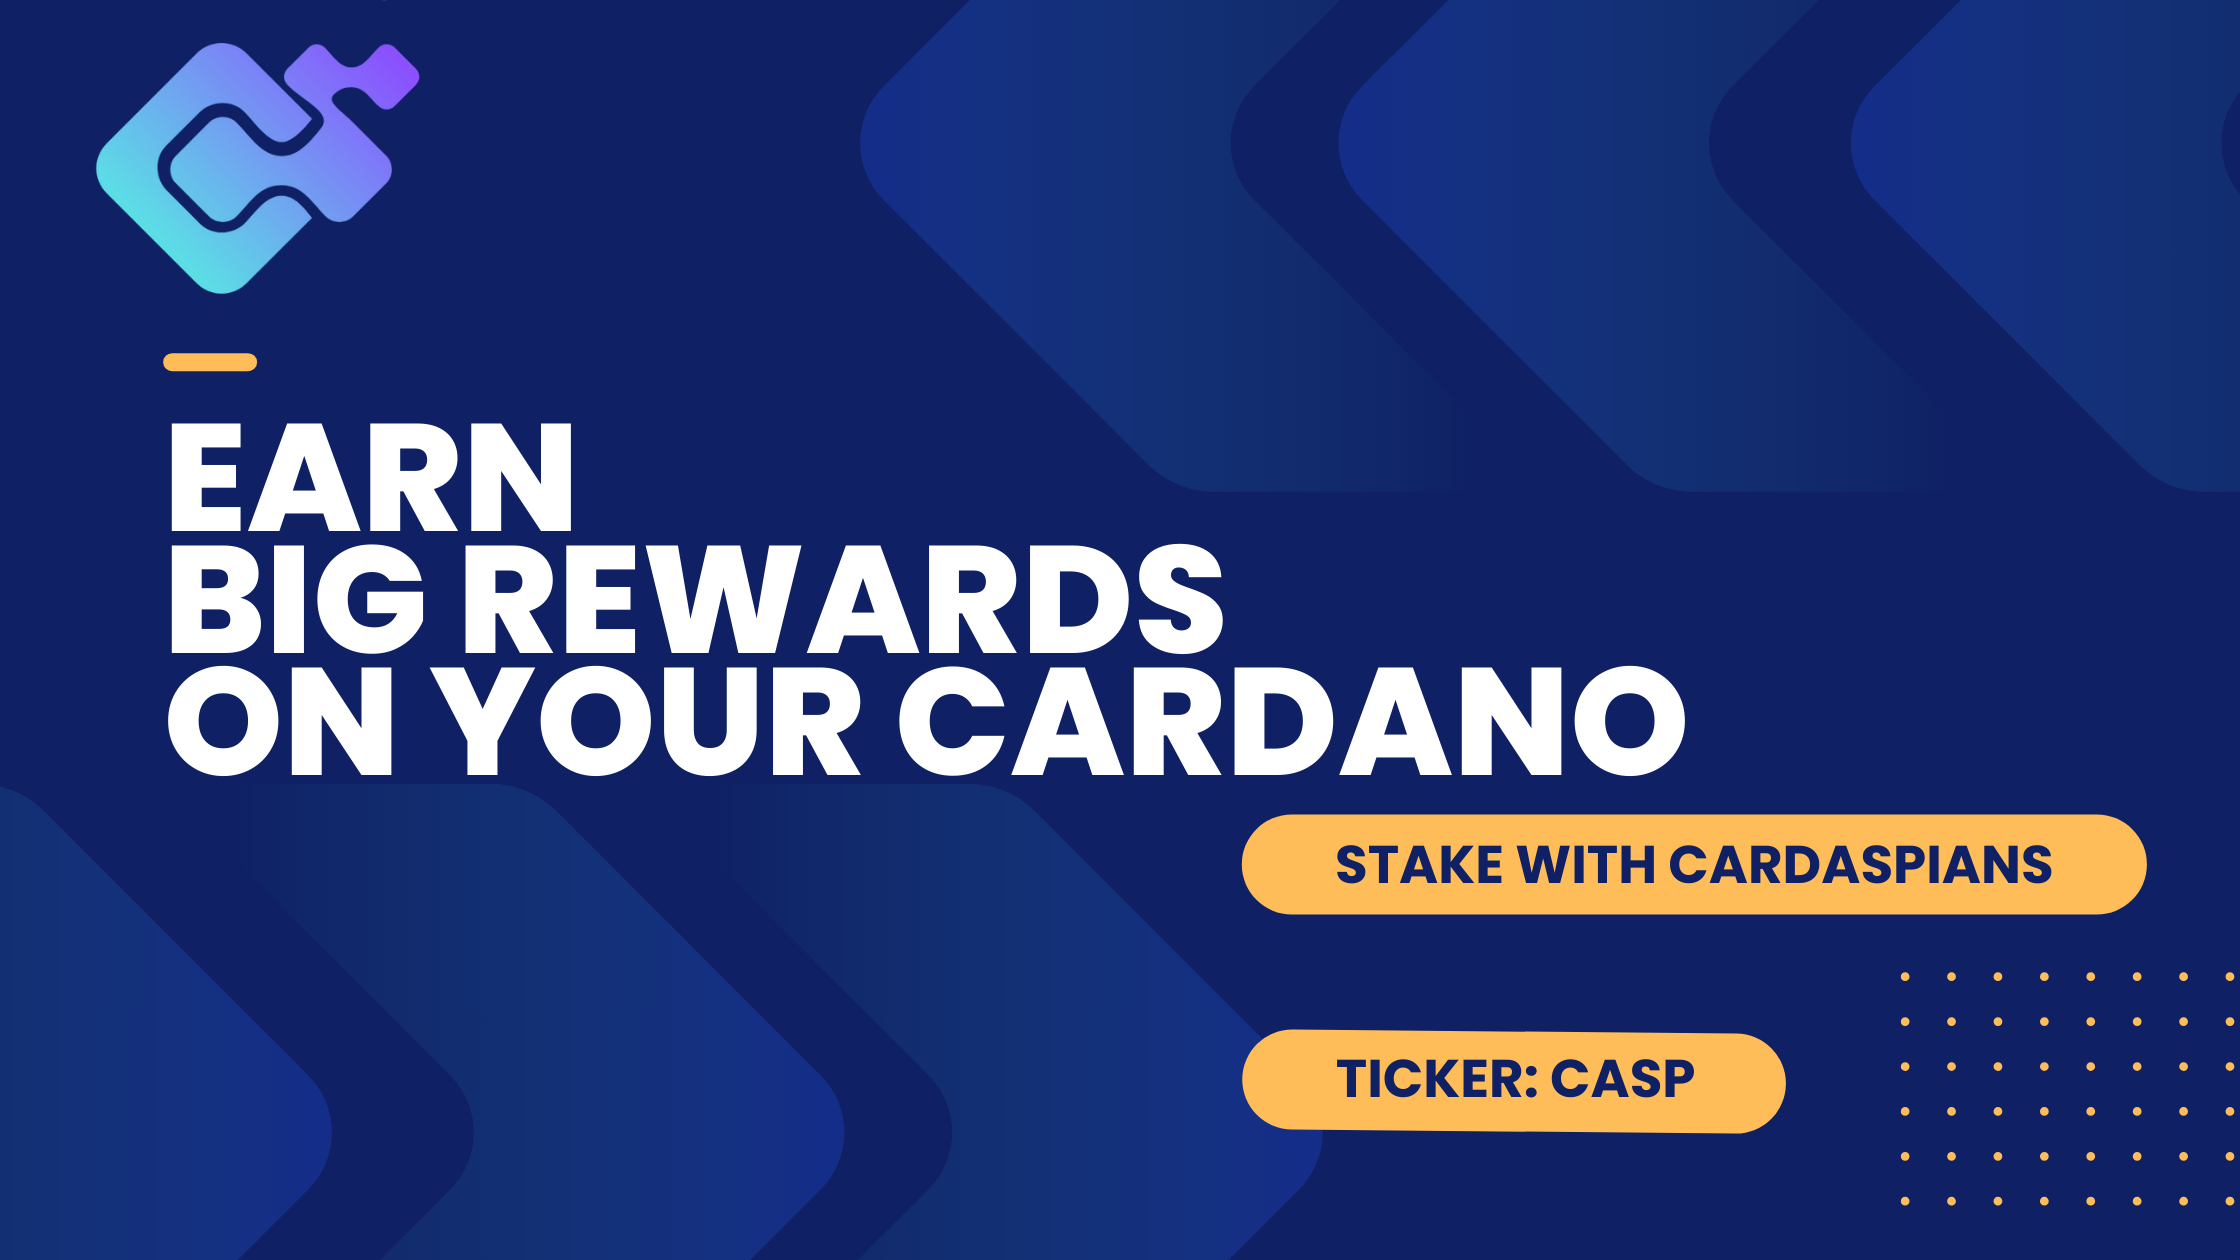 Cardano Staking Pool Cardaspians - Ticker: CASP